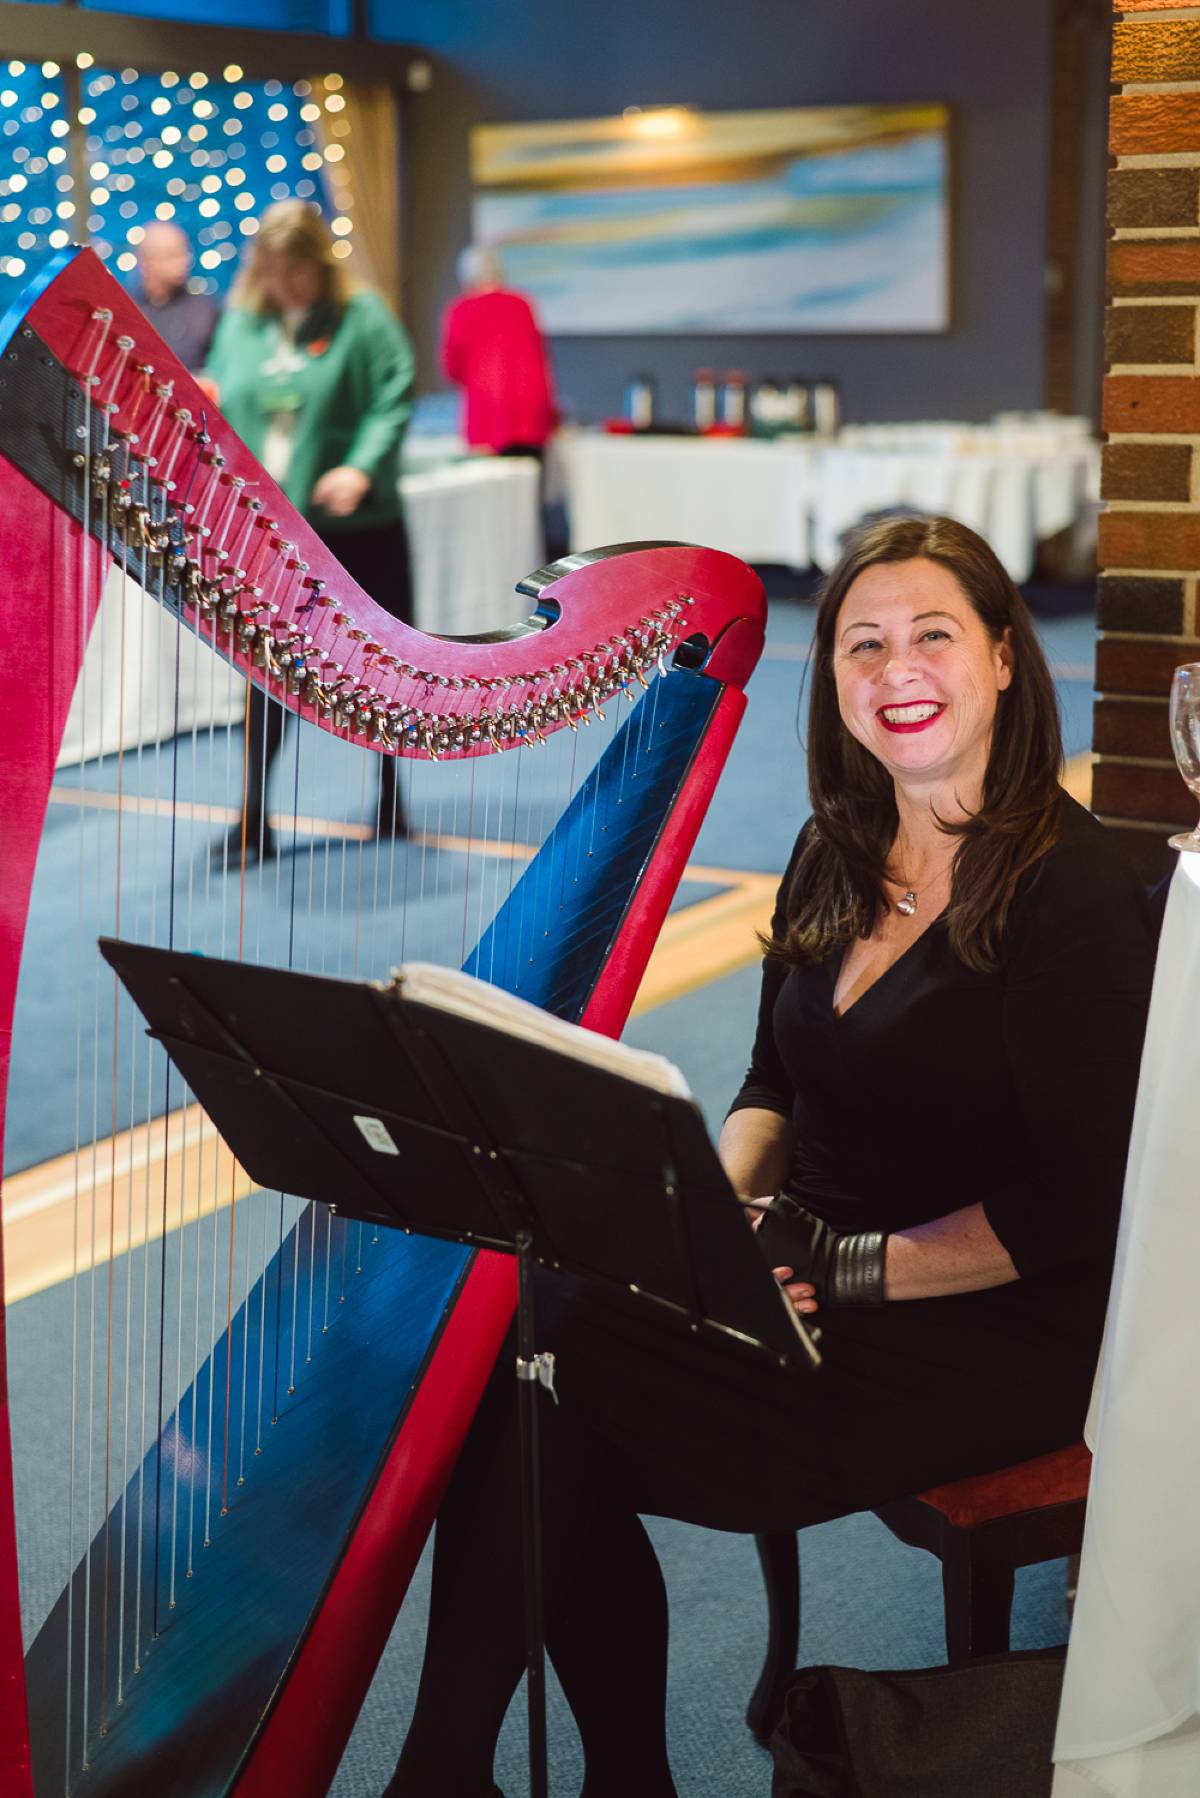 Harpist Keri Lynn Zwicker provides music for the event